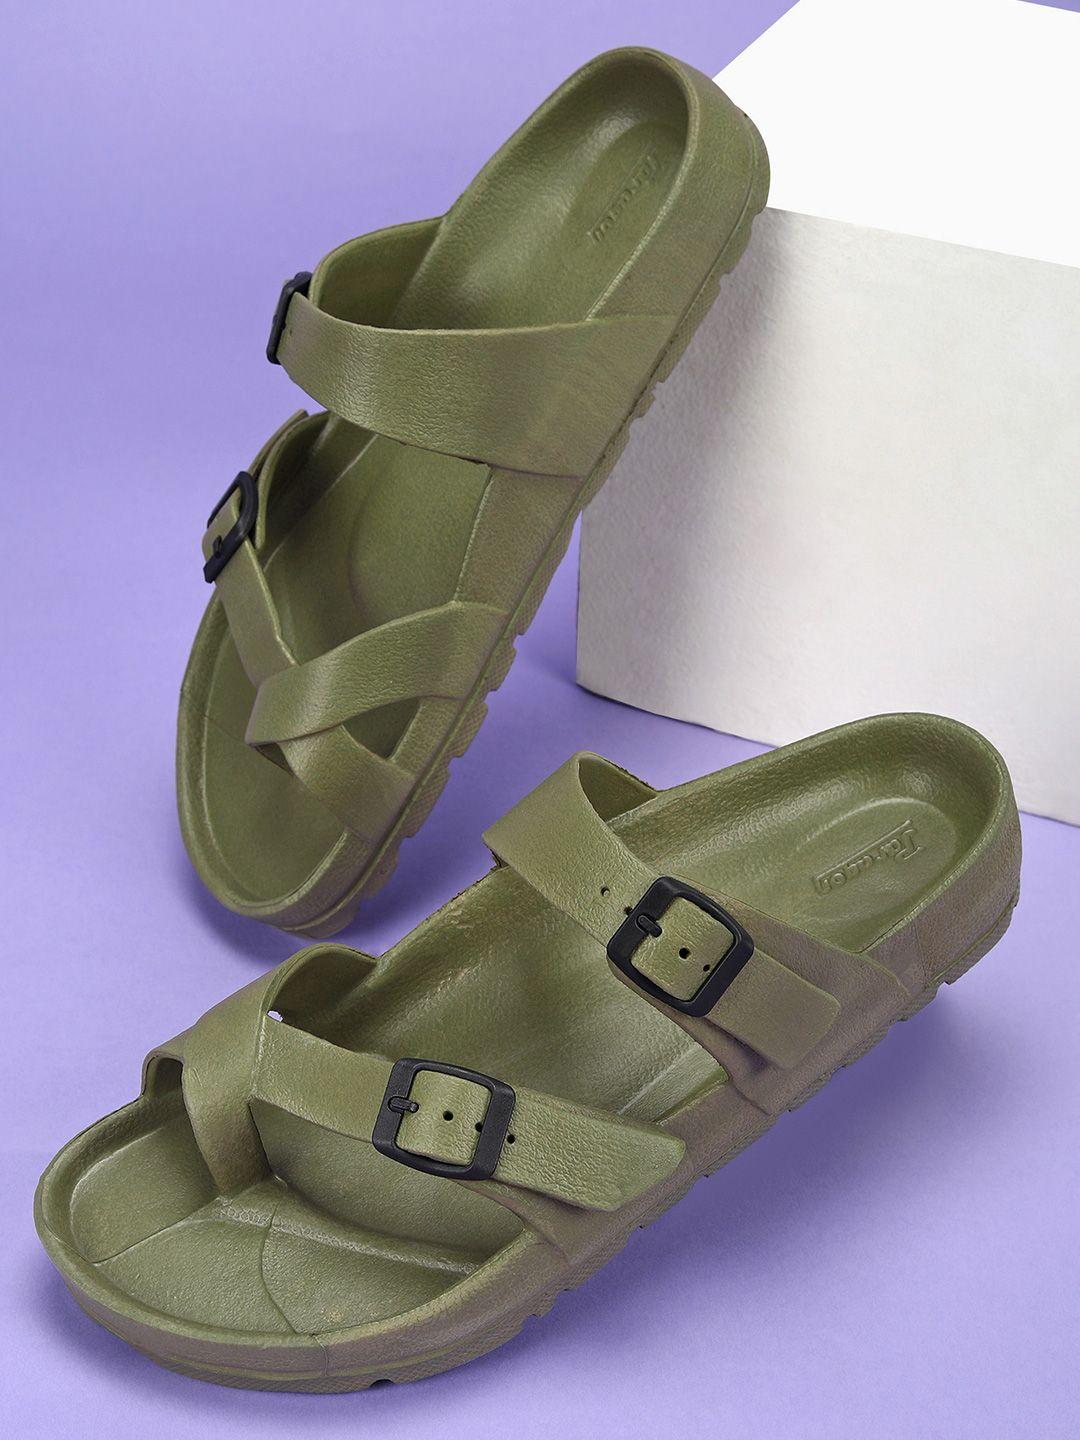 paragon-textured-lightweight-comfort-sandals